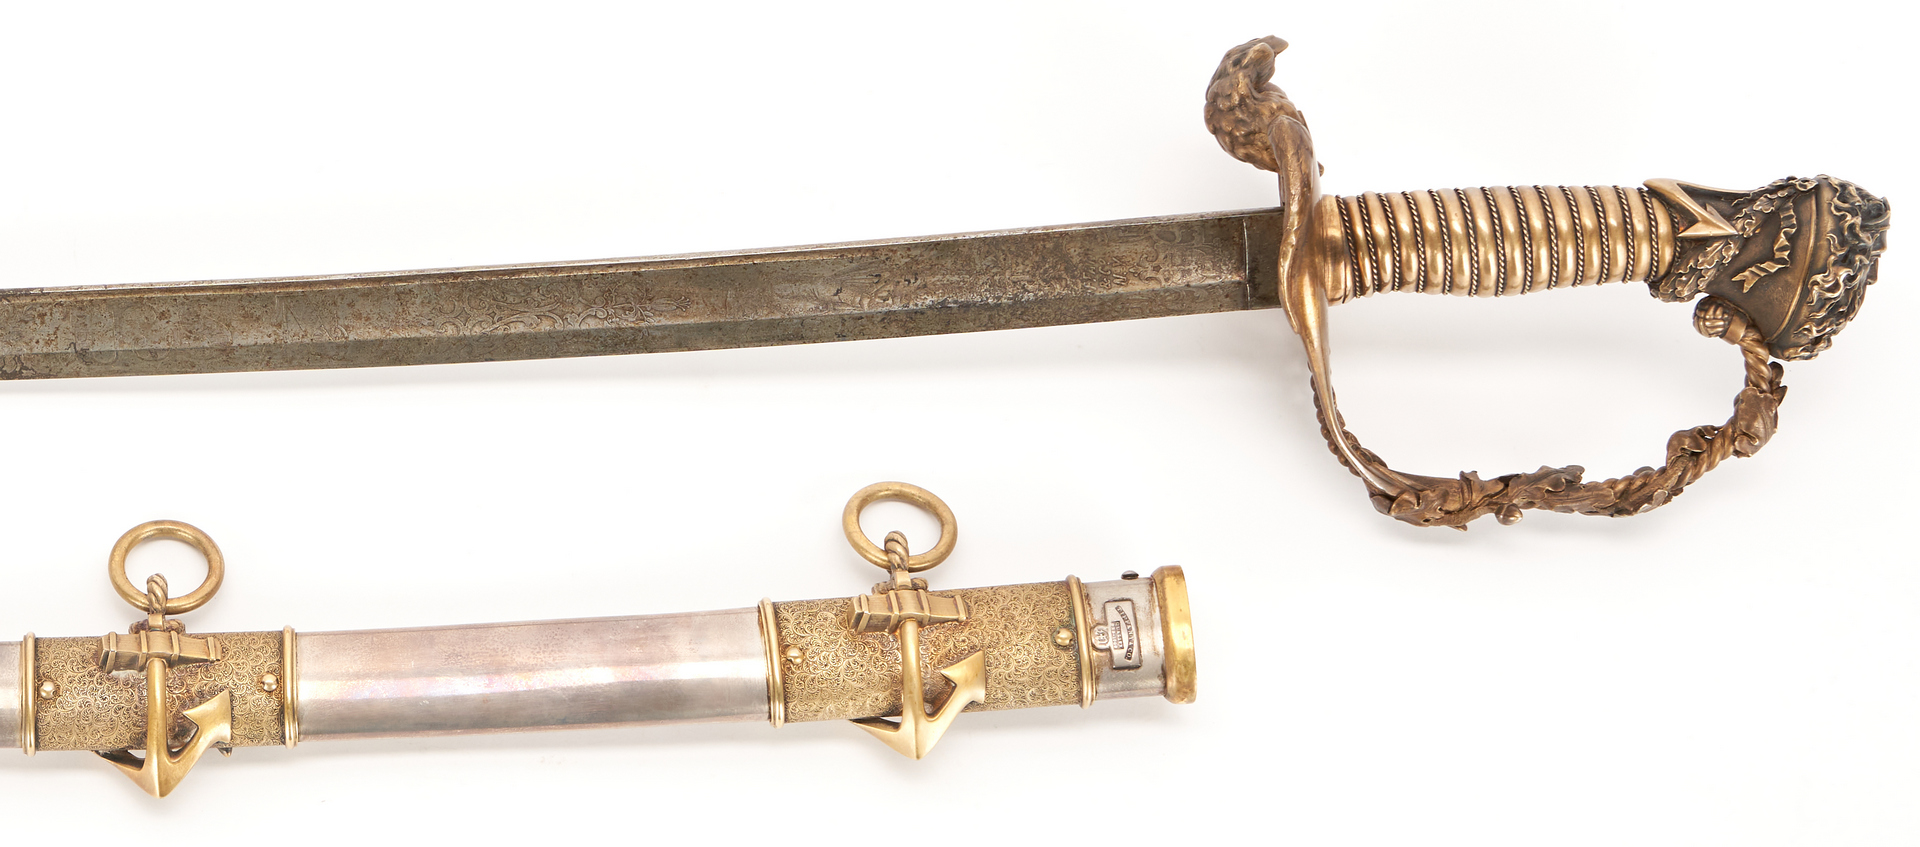 Lot 660: Civil War Tiffany Naval Presentation Sword, Rear Admiral Cadwalader Ringgold, Belt and Commendations